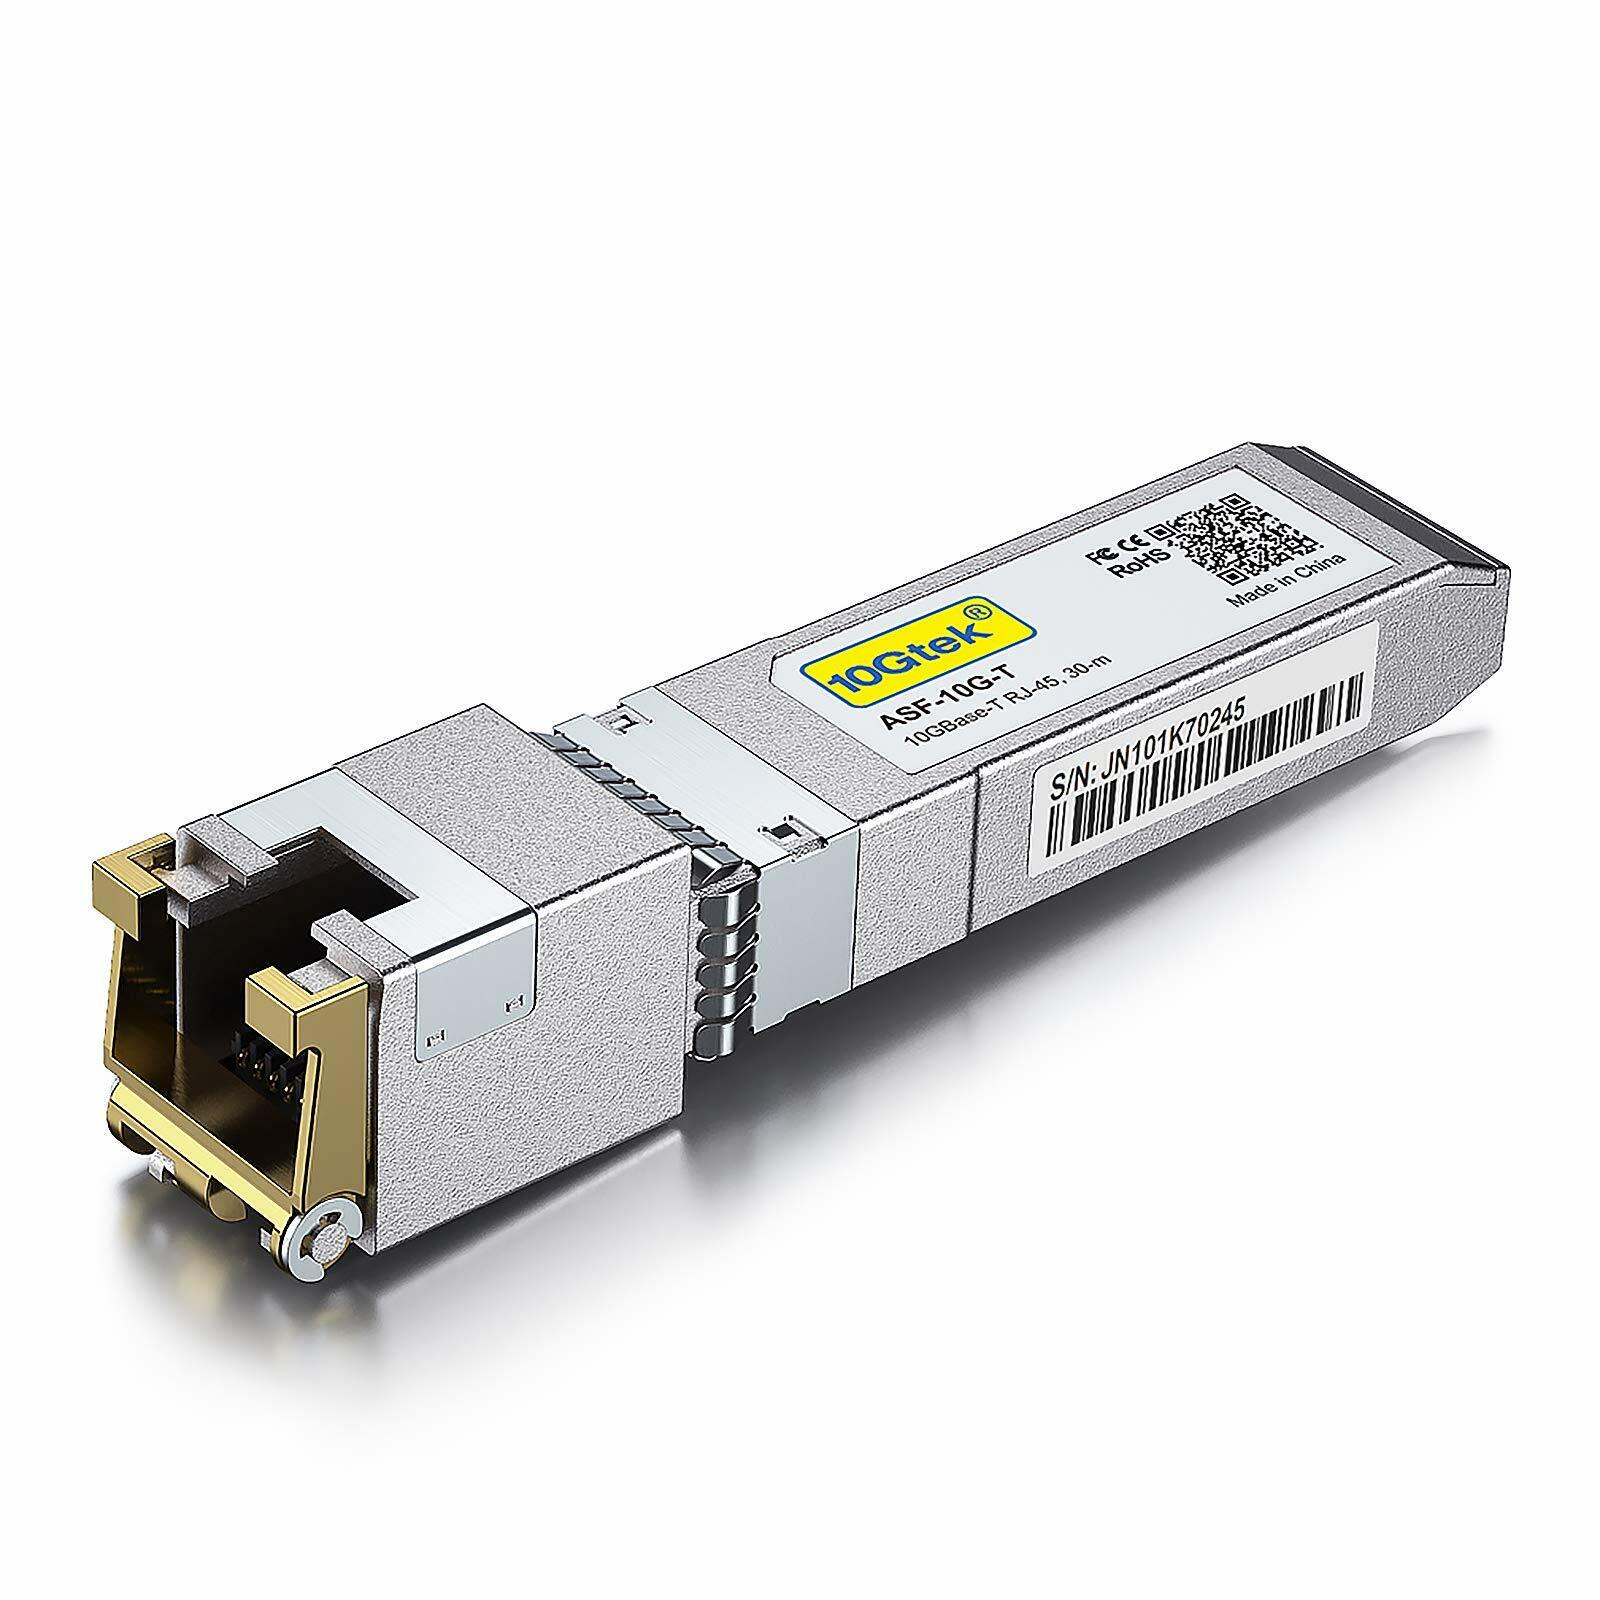 For Cisco SFP-10G-T, Ubiquiti UF-RJ45-10G Transceiver 10G SFP to RJ45 10Gbase-T